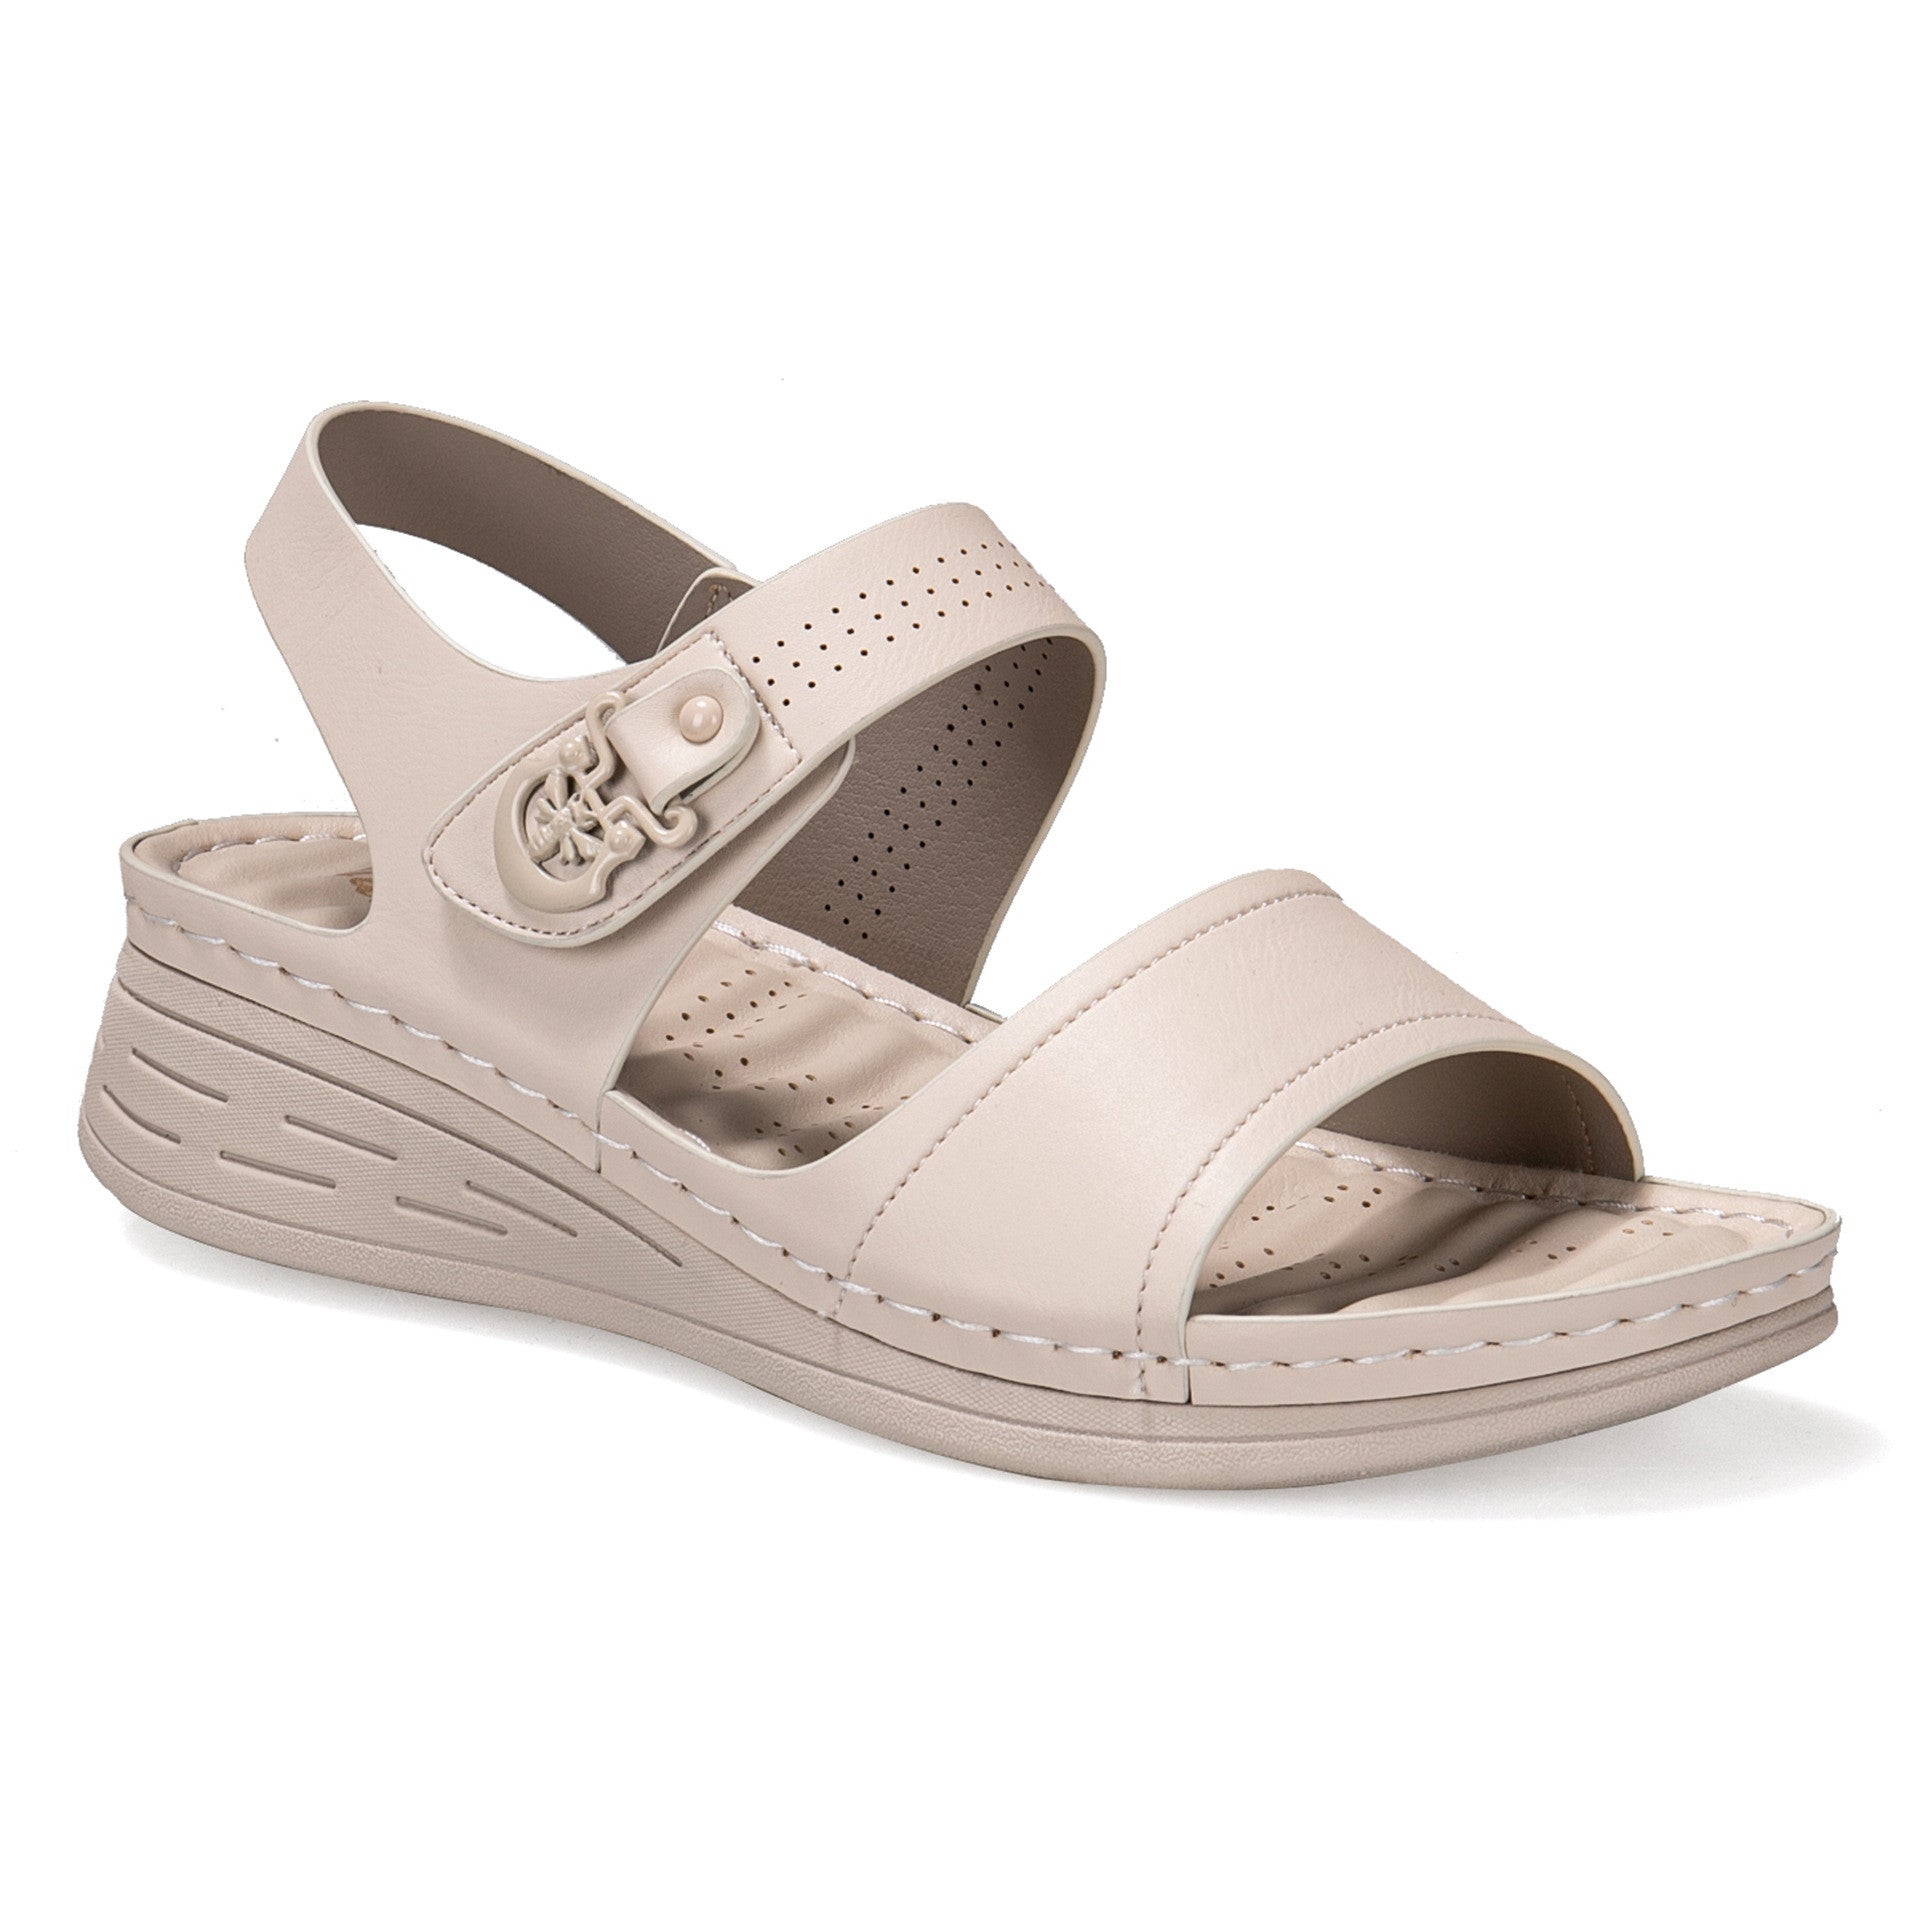 Foot Latex Sandals Wedge Comfortable Large Size Sandals - ladieskits - 0